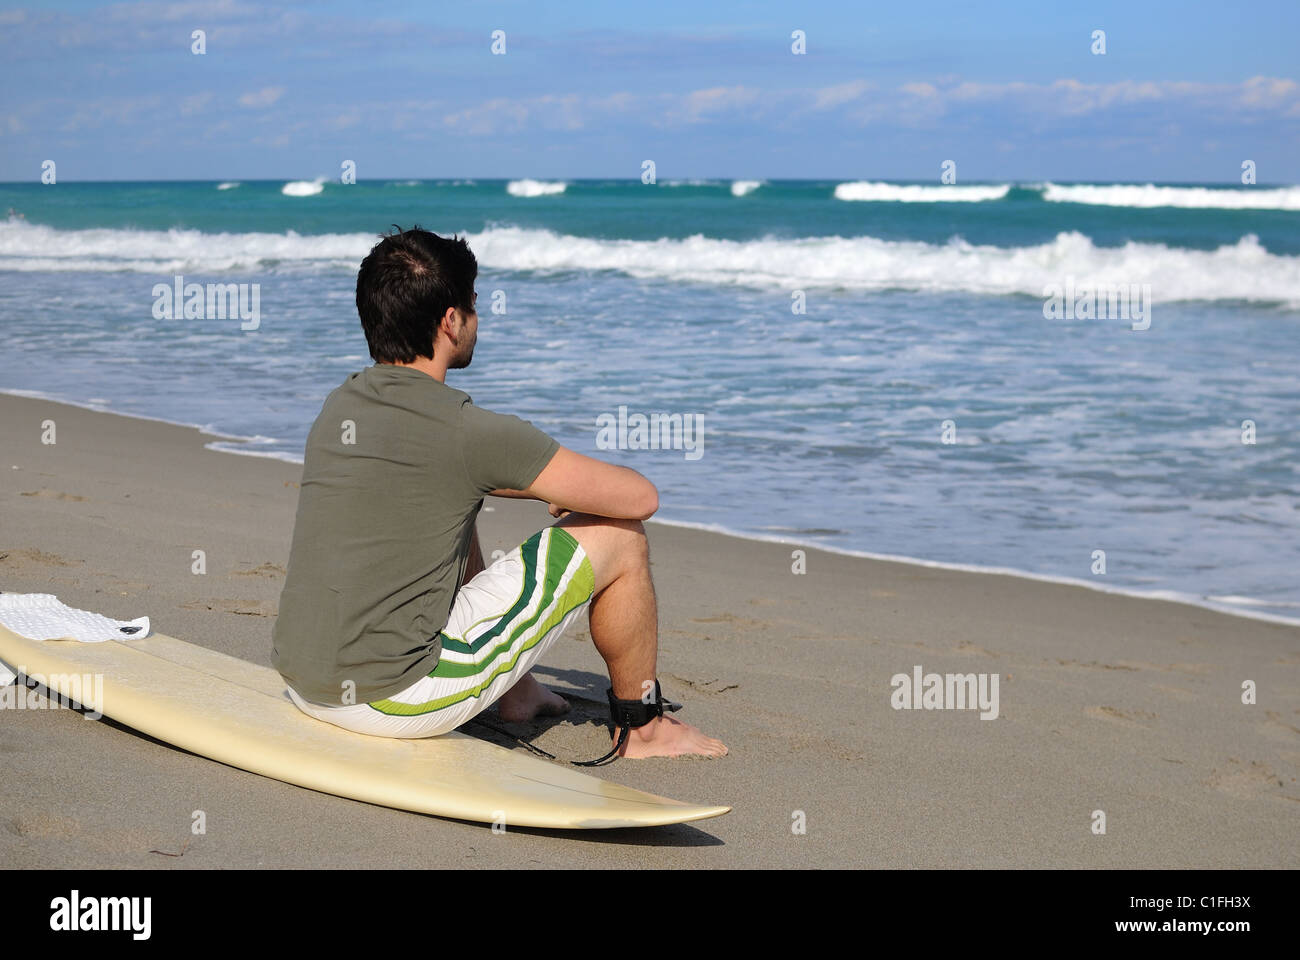 Surfer am Strand mit seinem Brett. Stockfoto